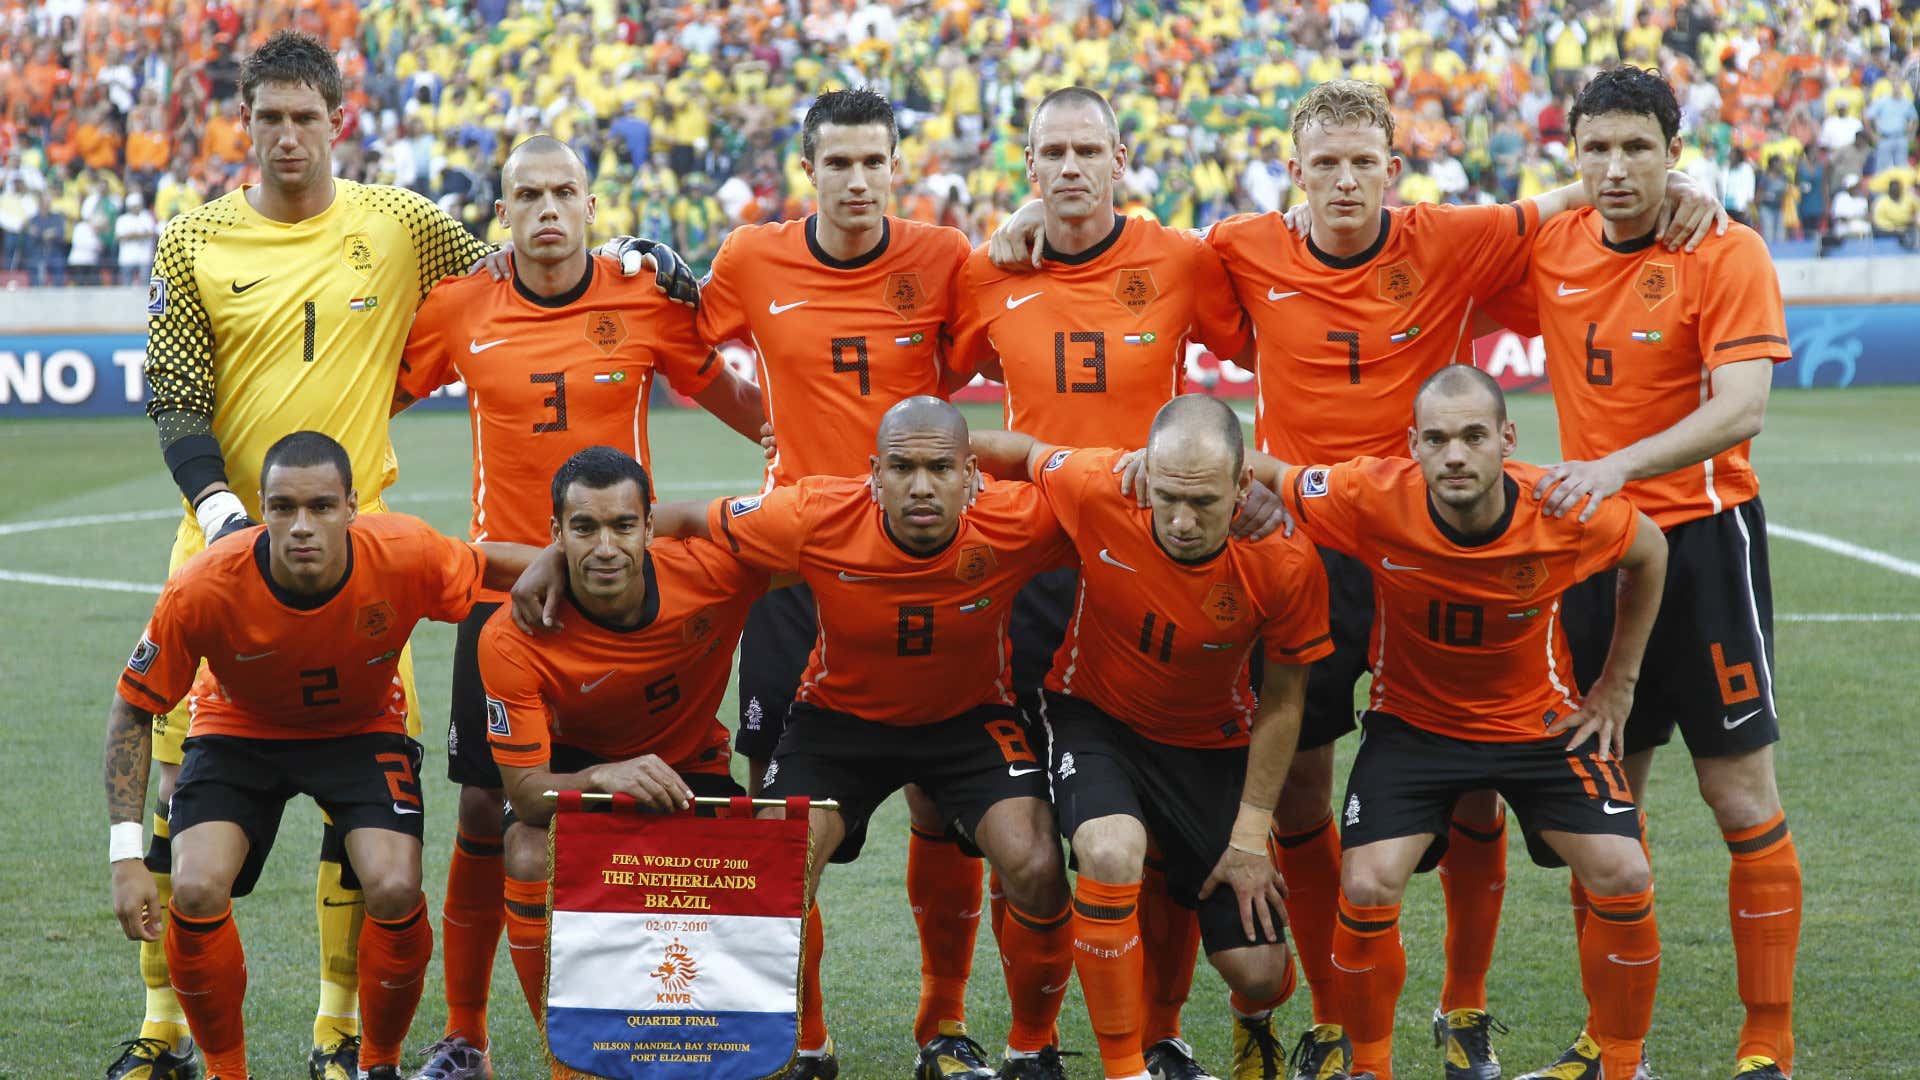 Netherlands world cup 2010